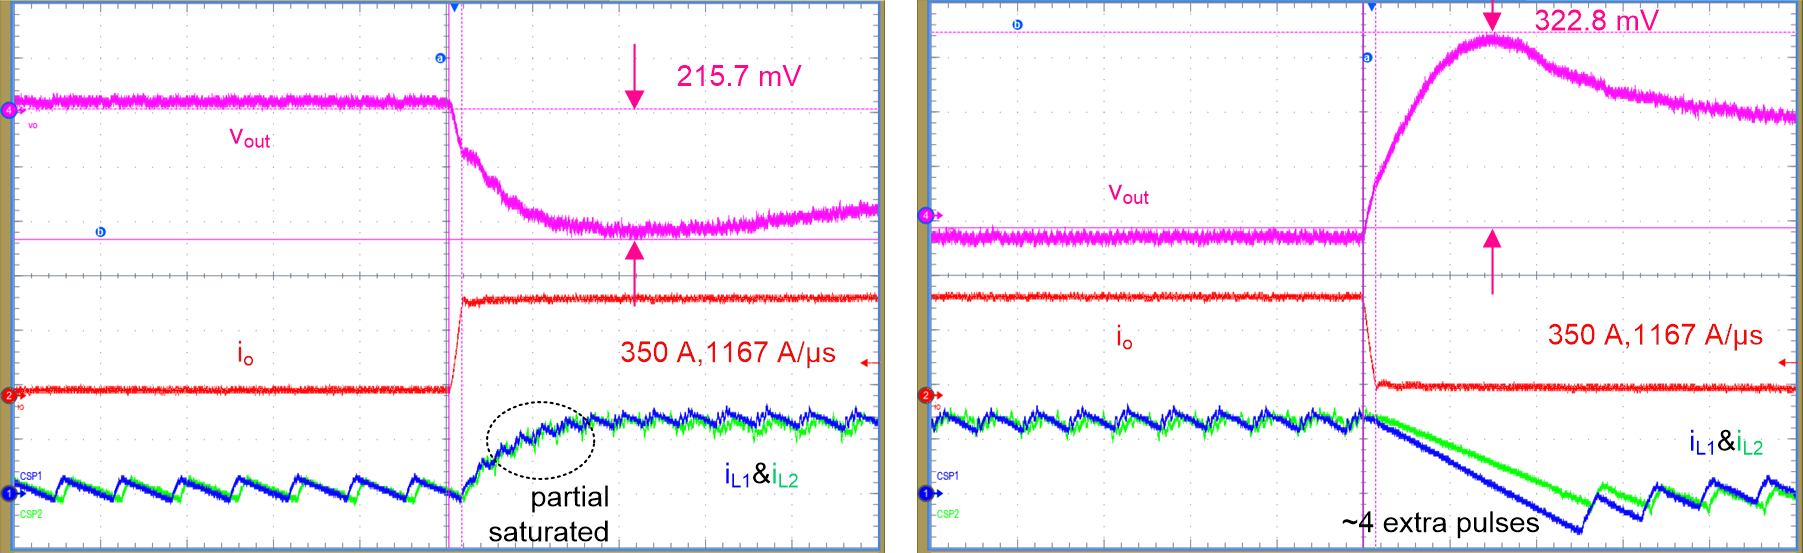 waveform-03-load-transient-waveforms-of-example-3-sluaa12.png